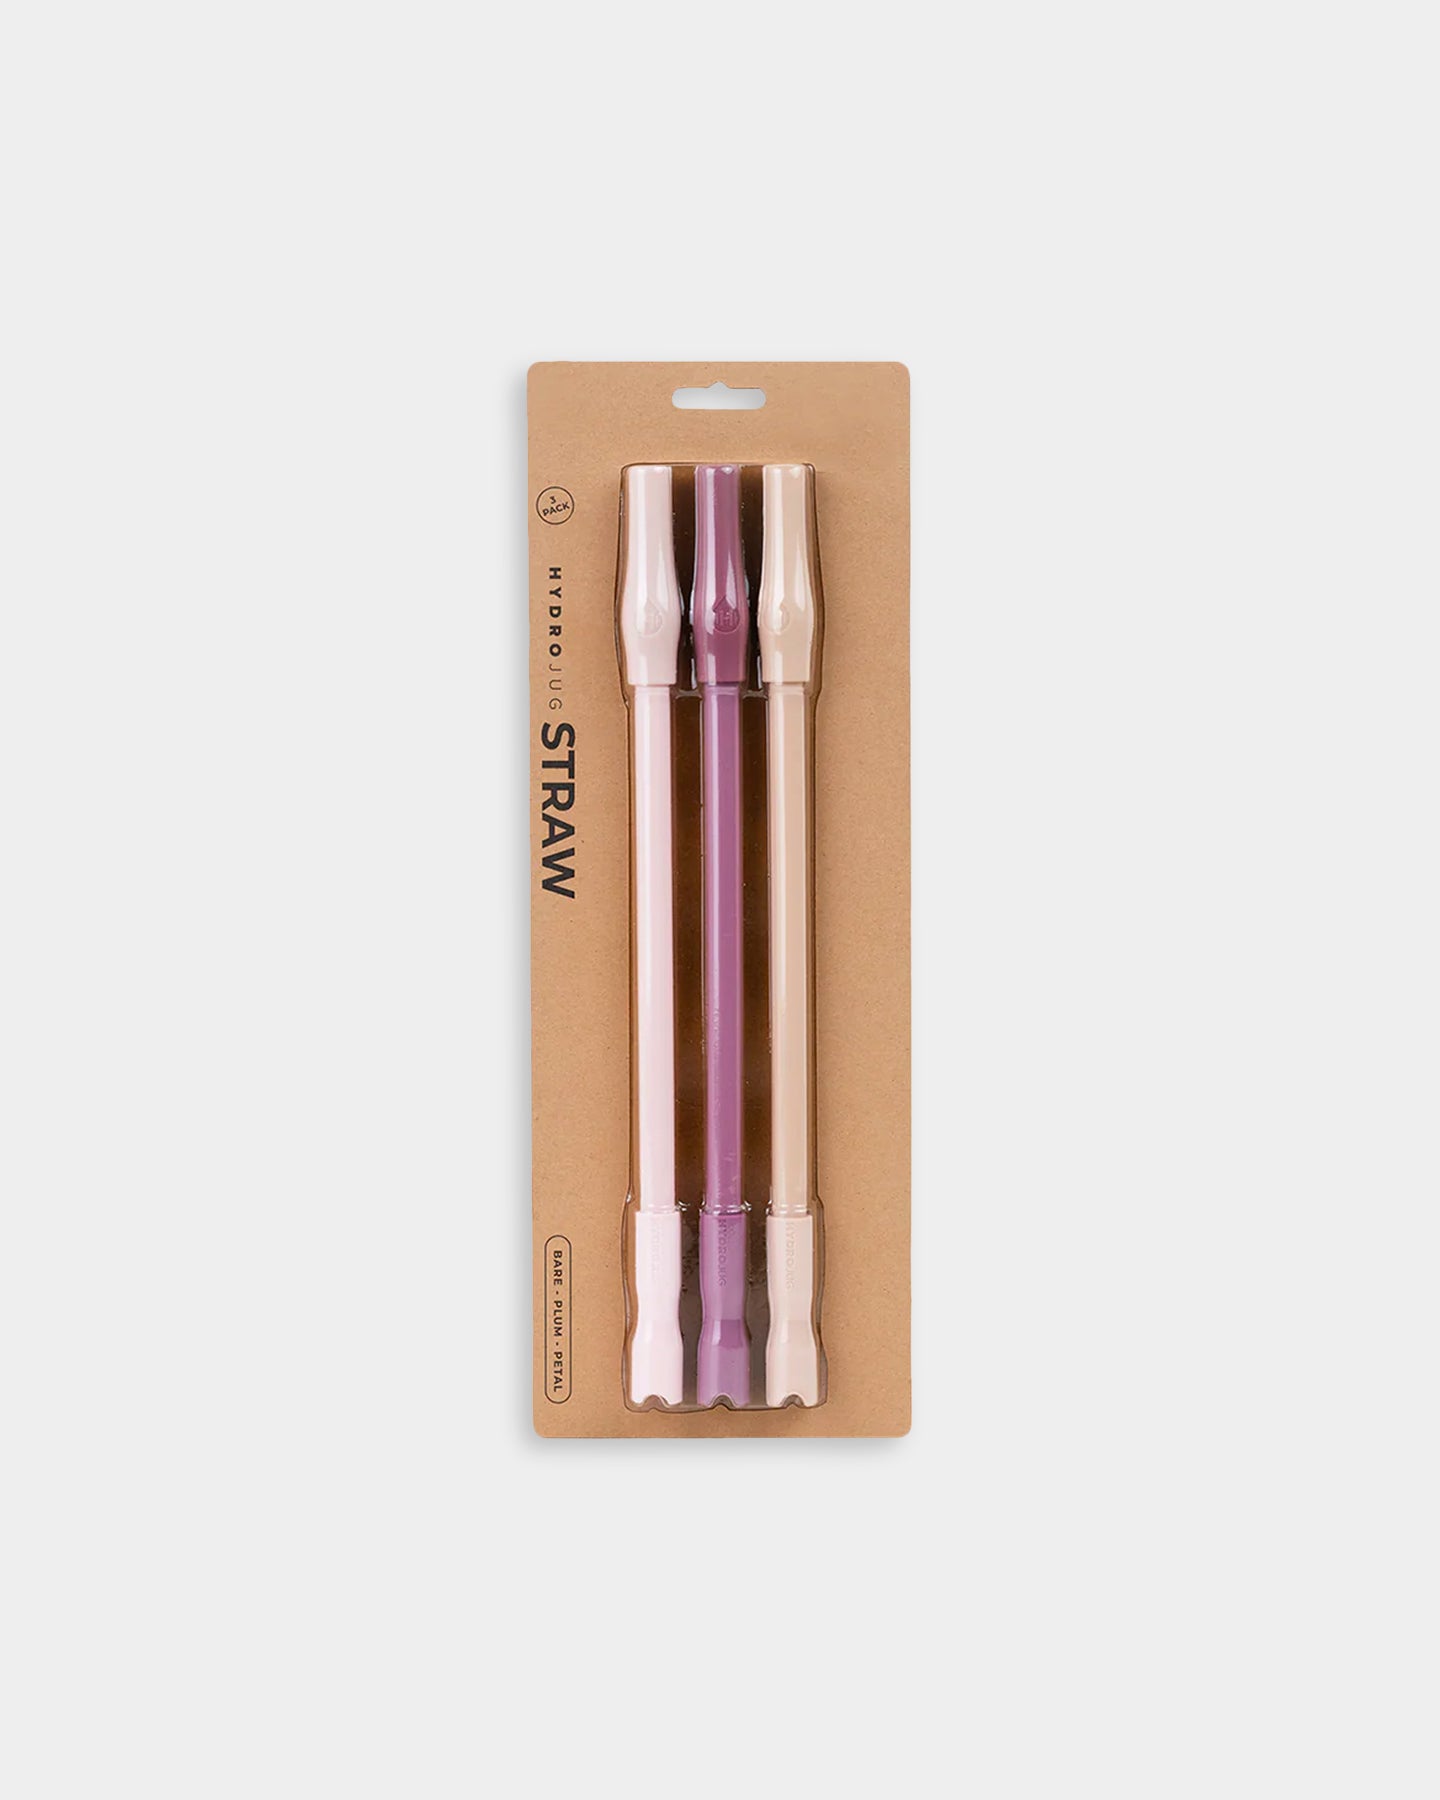 Hydrojug Straws - Pink Neutrals - 3 Pack